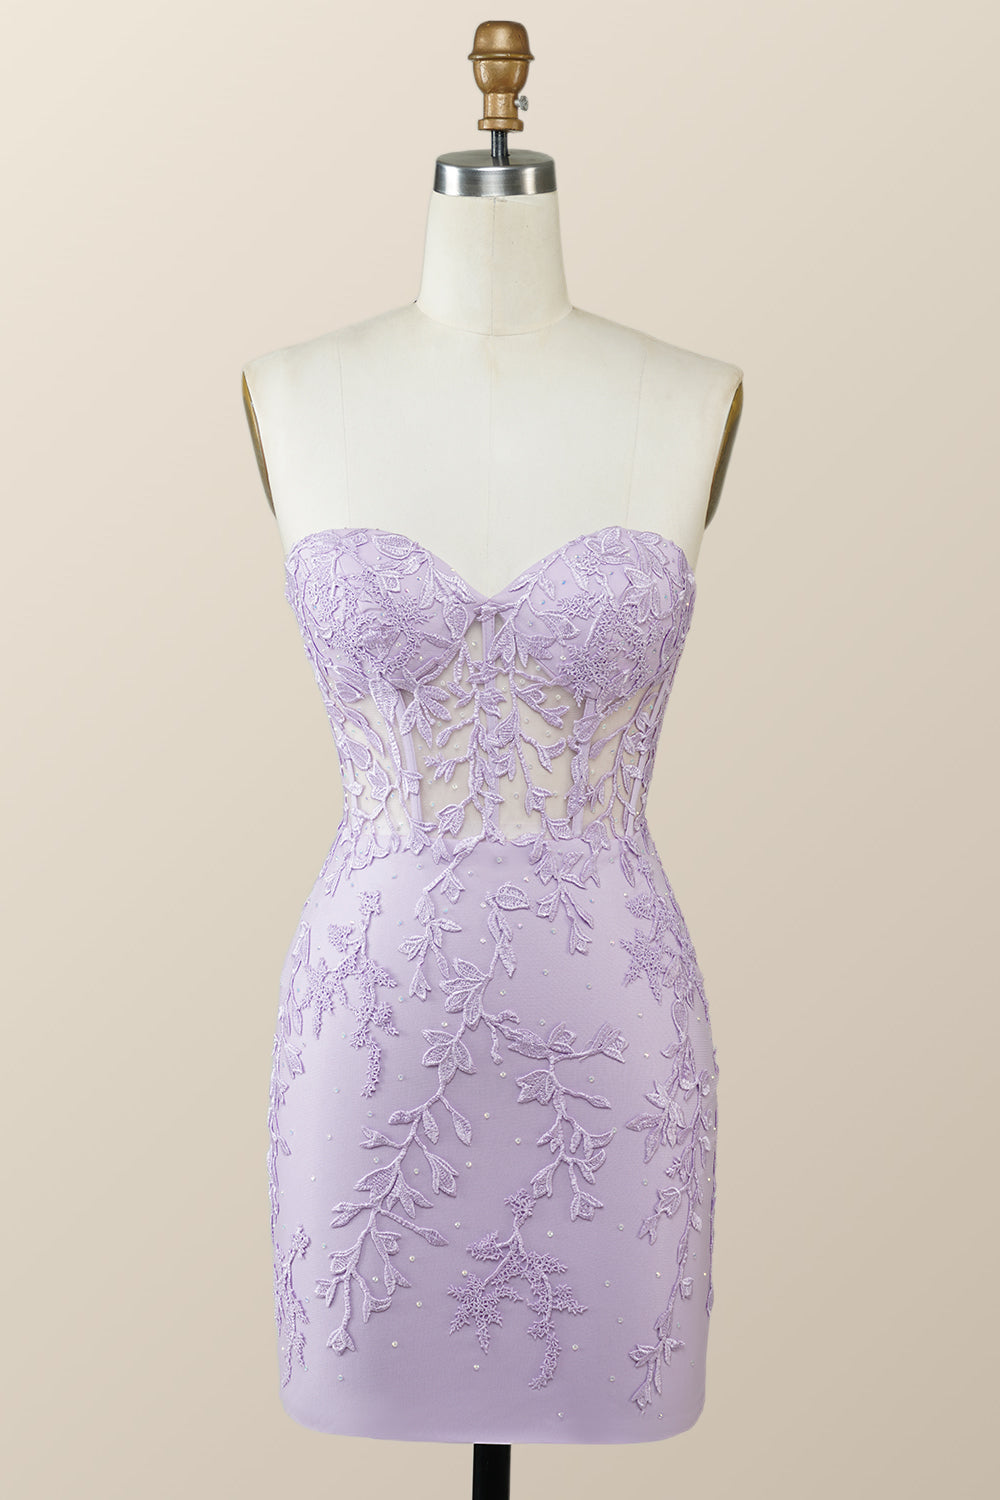 Fuchsia Lace Appliques Tight Mini Dress - Ohmollydress